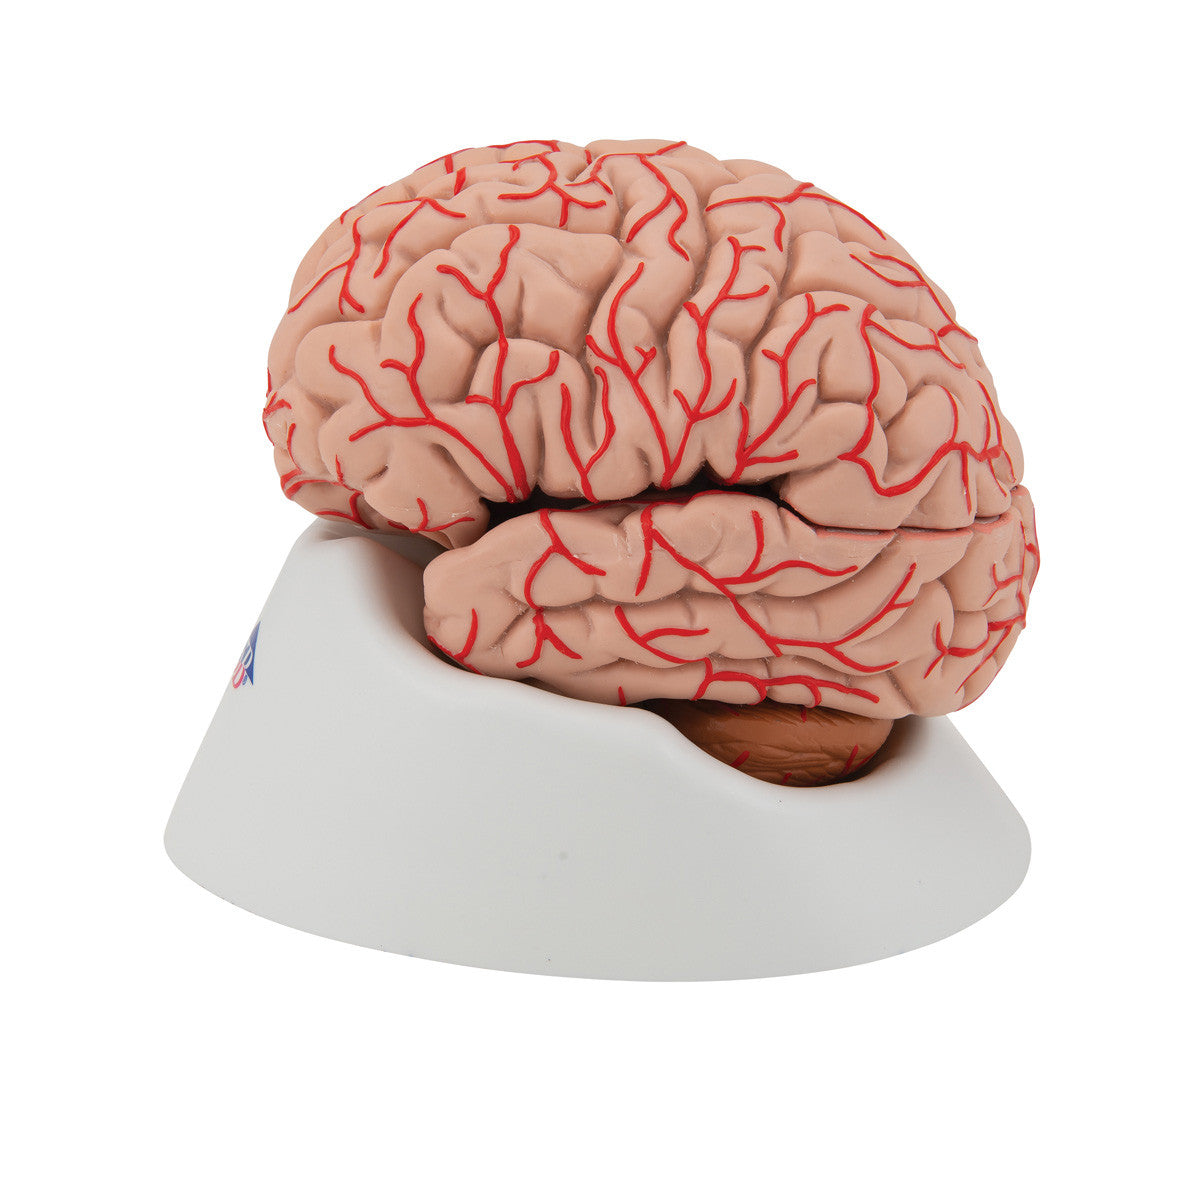 c20_05_1200_1200_human-brain-model-with-arteries-9-part-3b-smart-anatomy__53853.1589753158.1280.1280.jpg